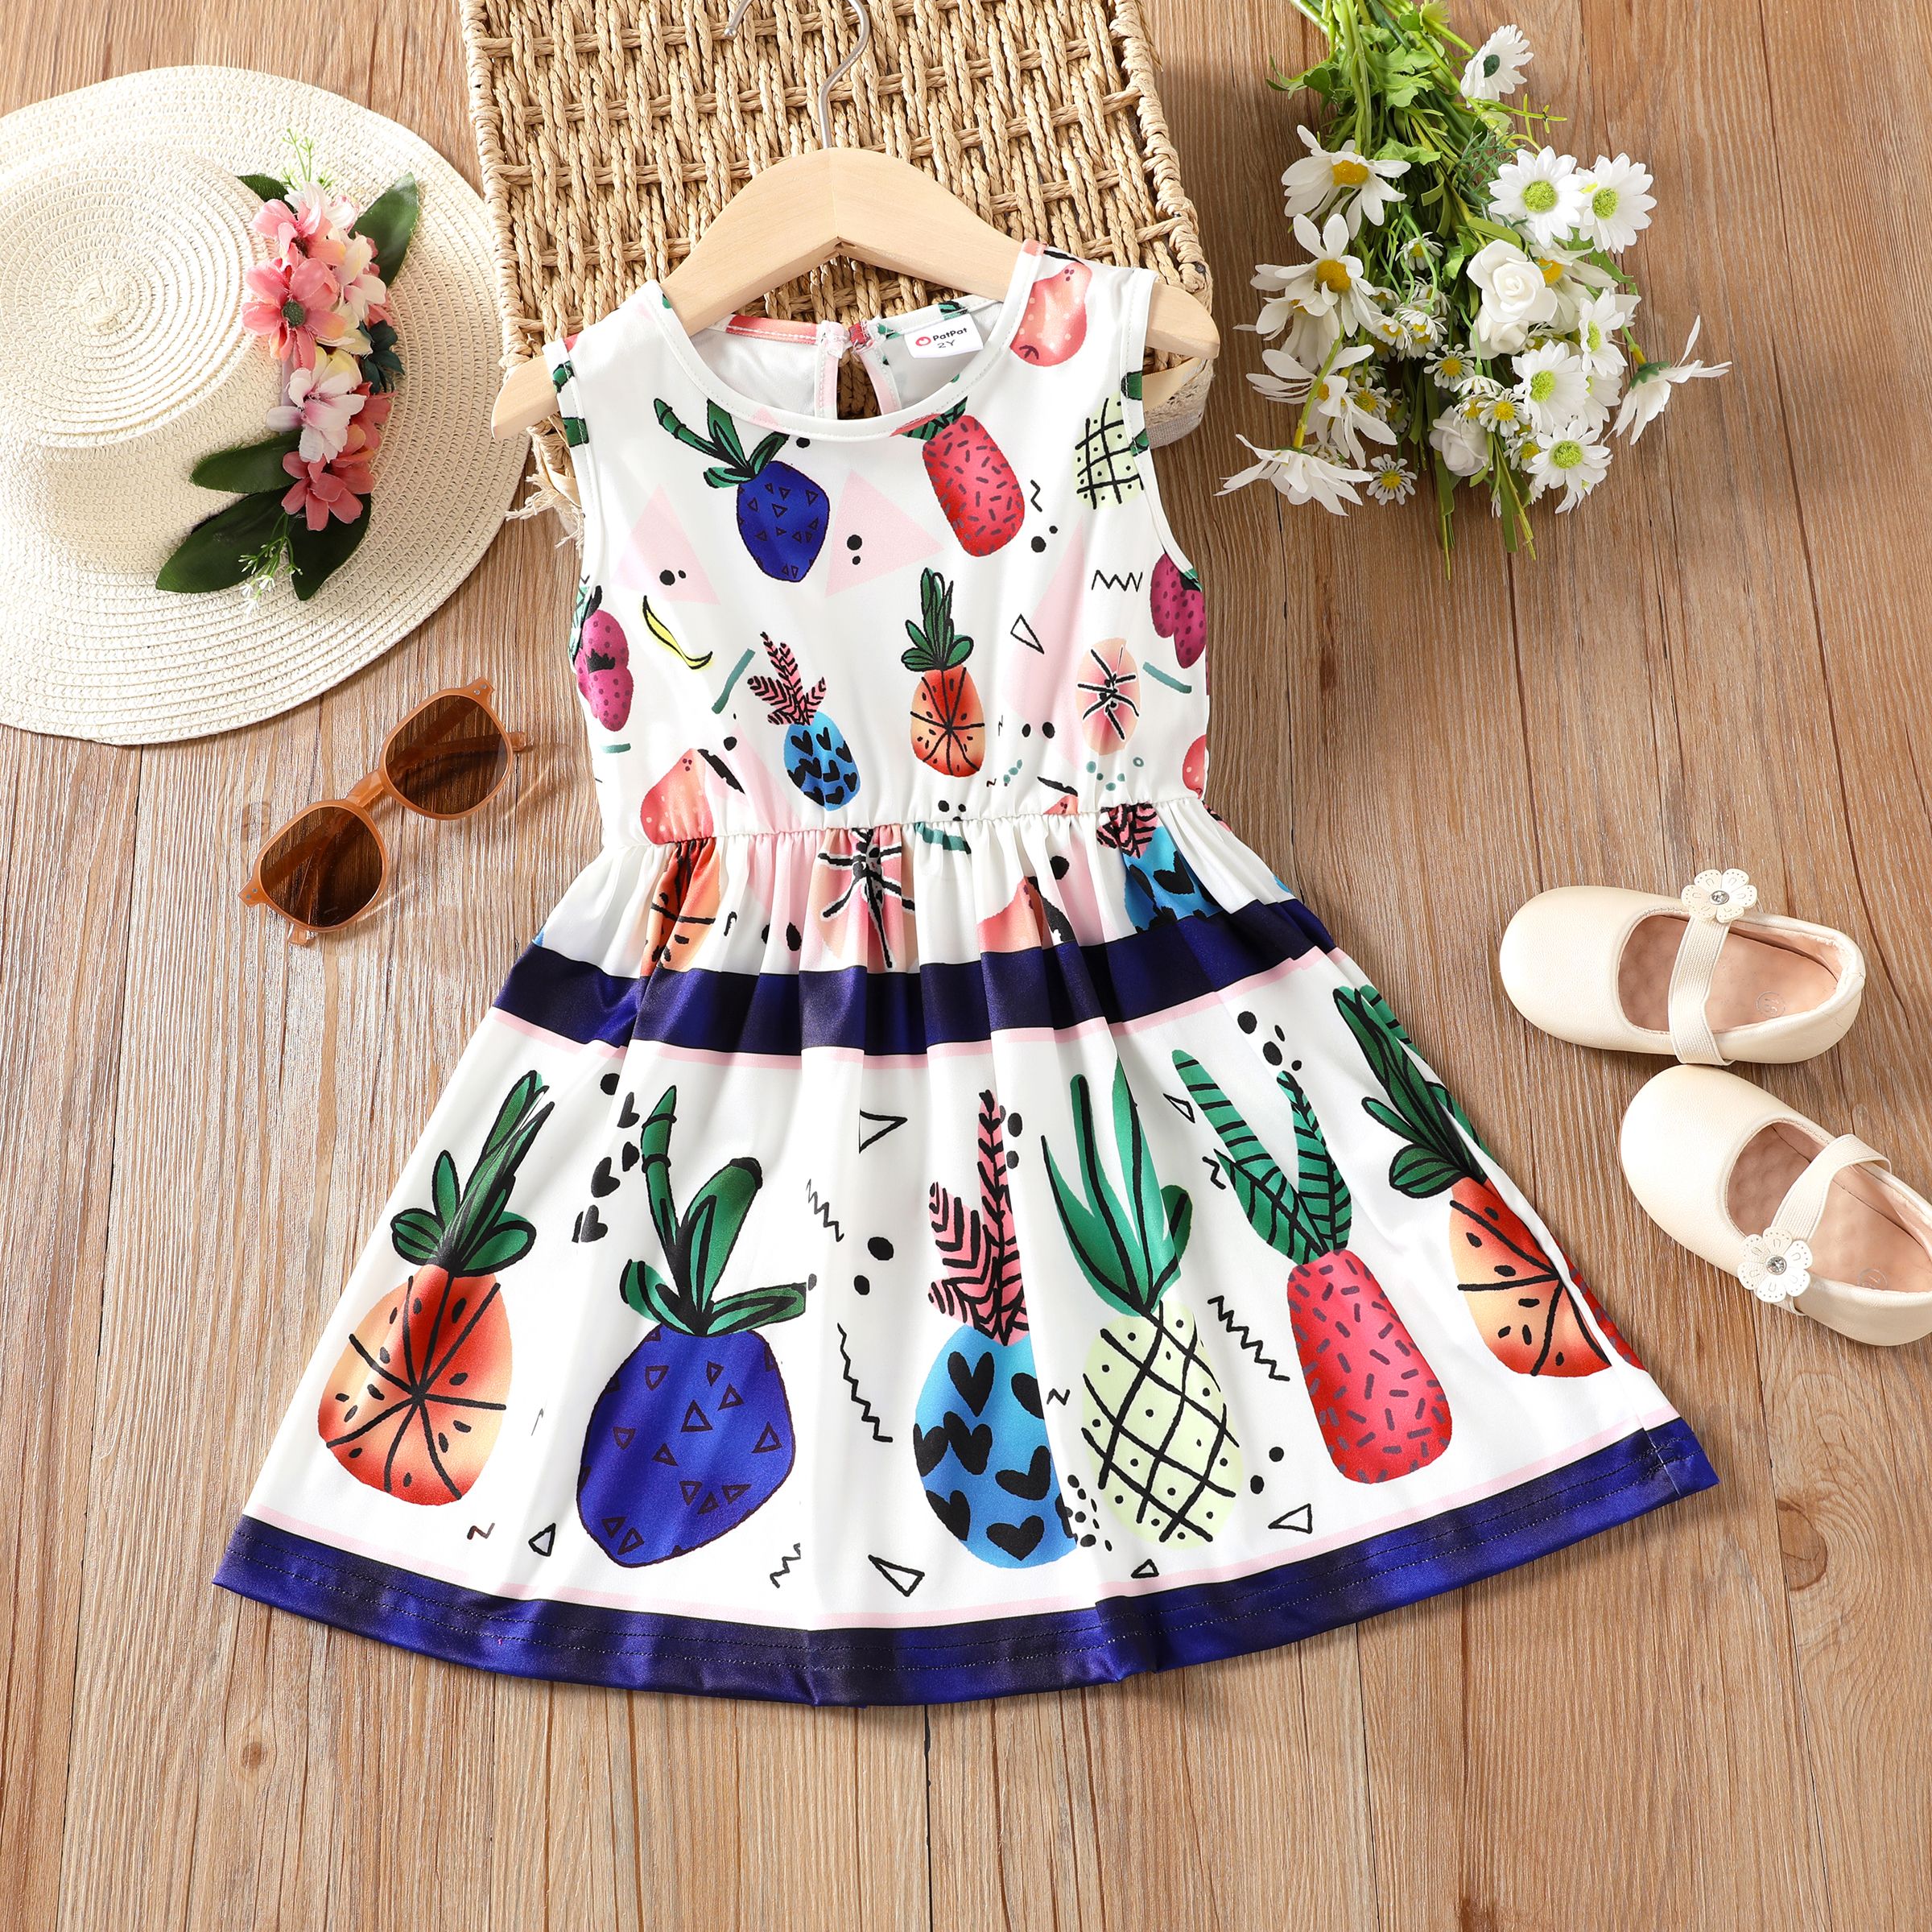 Pineapple Print Sleeveless Girls Dress - Summer Fashion for Toddlers